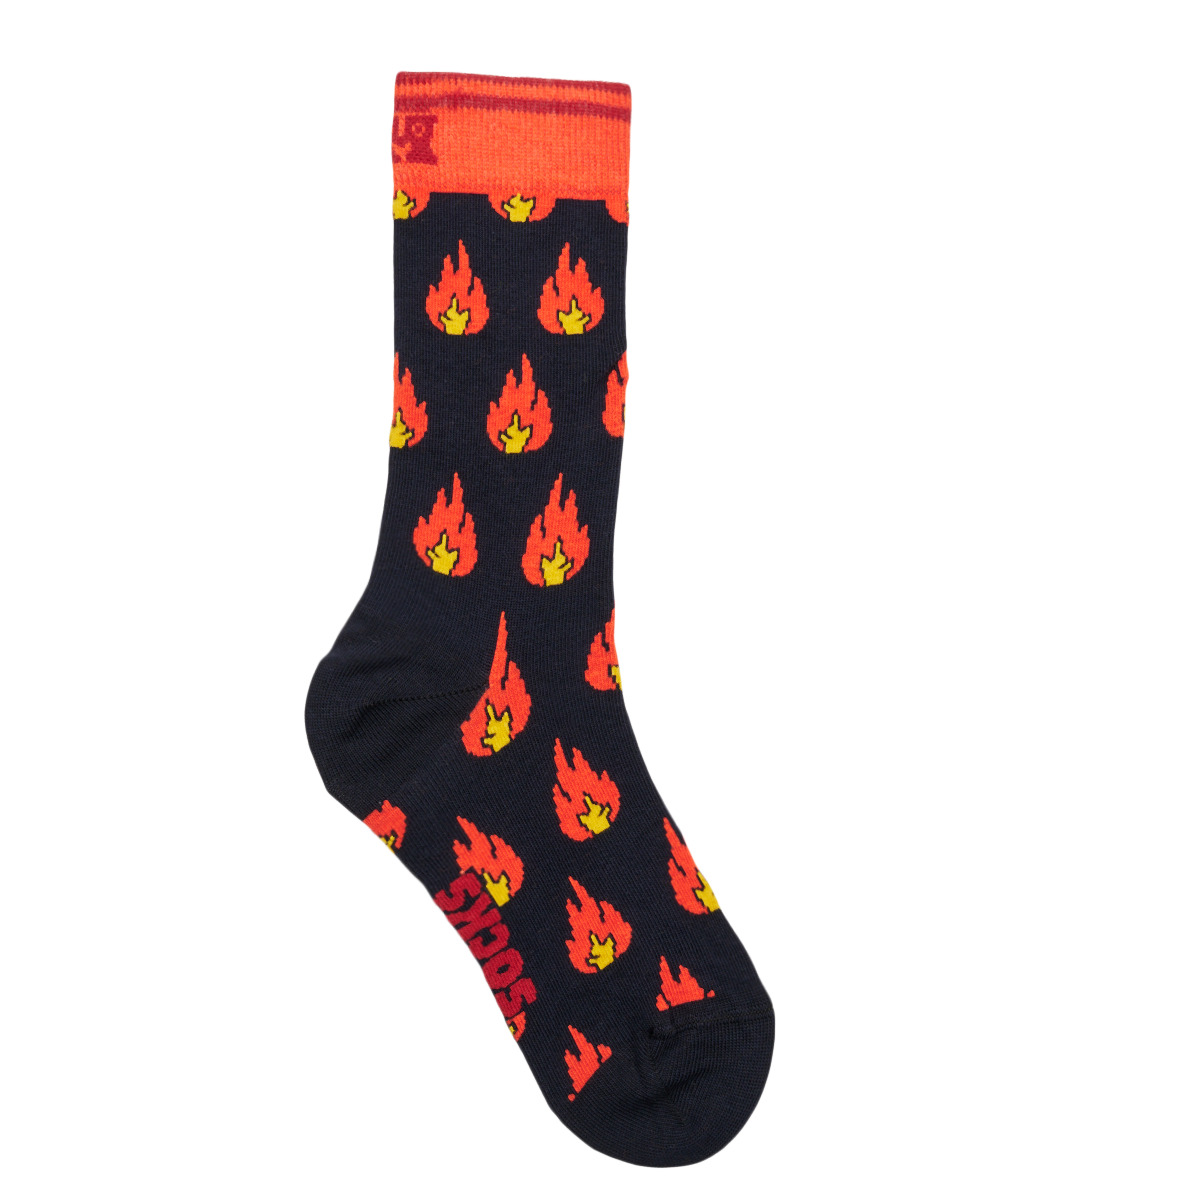 Happy socks  FLAMME  Podkolenky